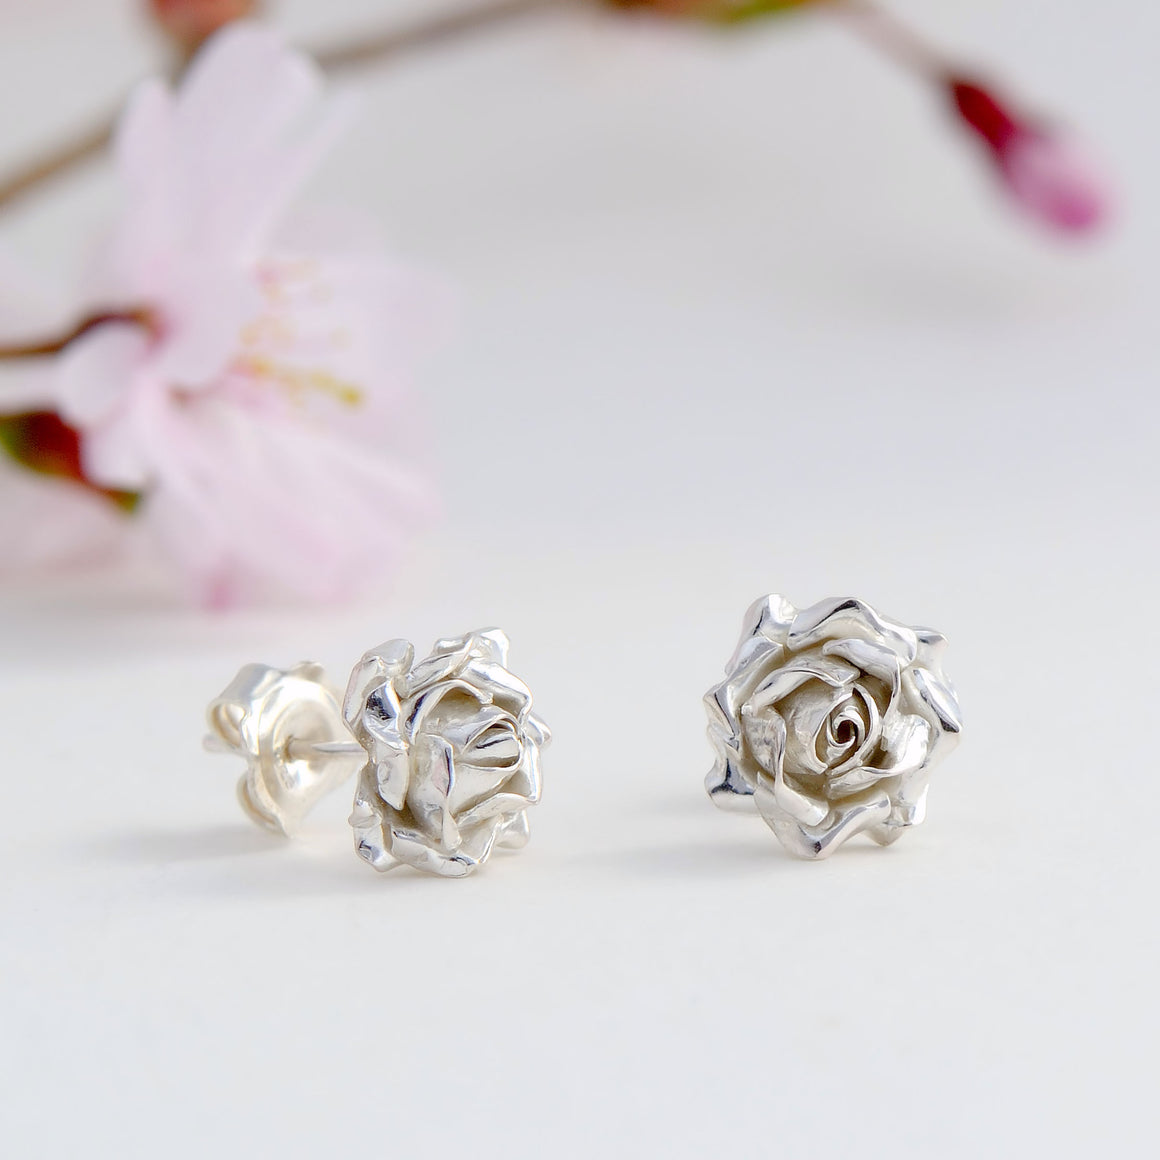 small rose stud earrings